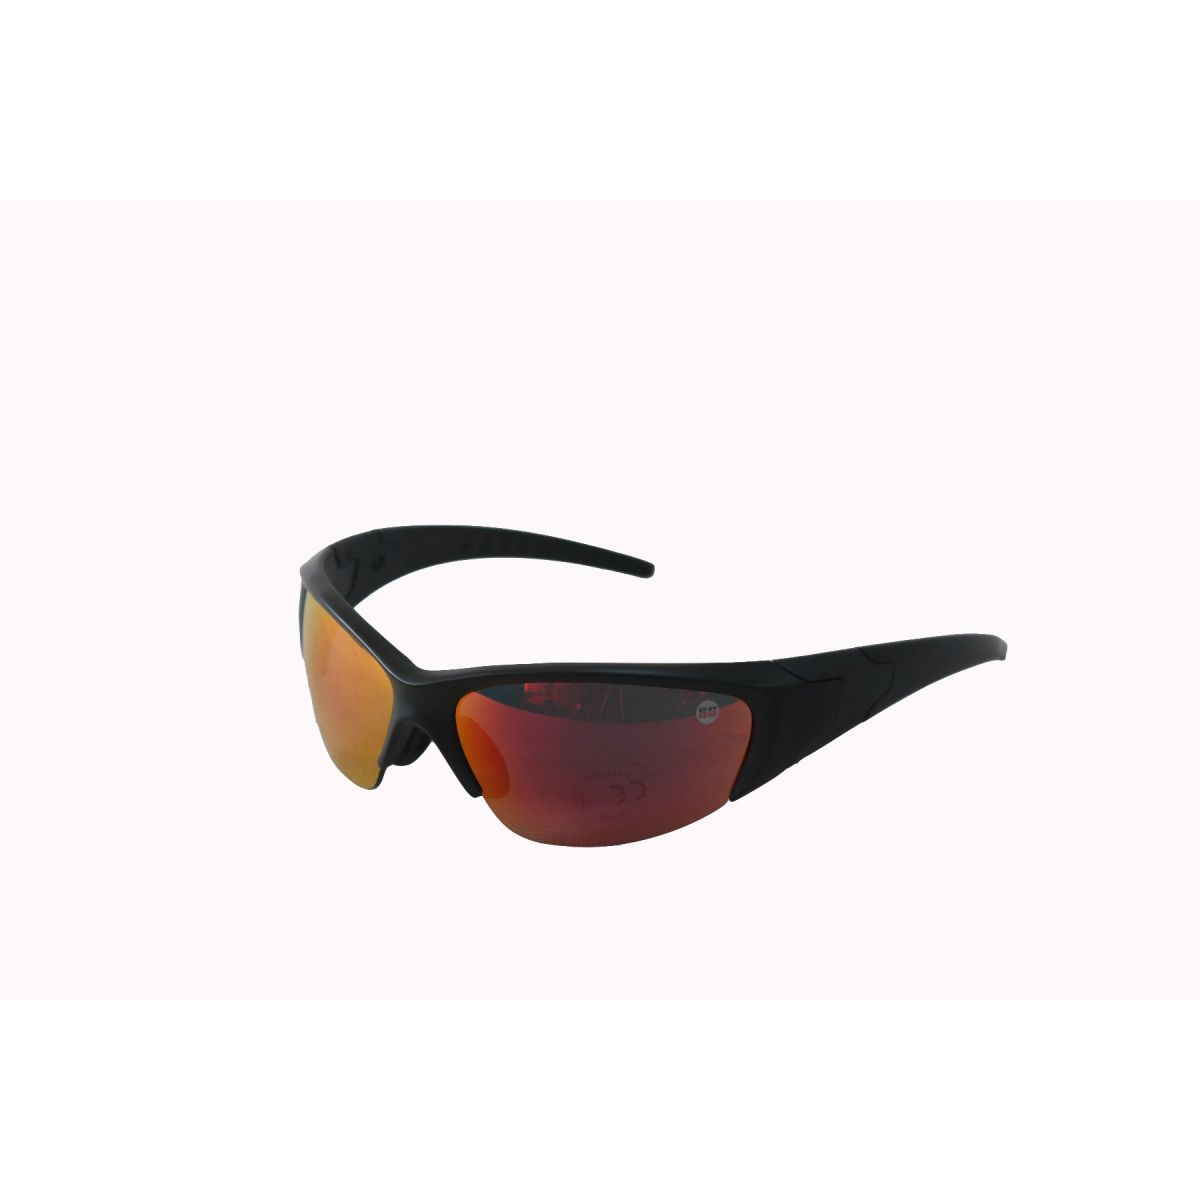 SS Legacy pro 4.0 sports Sunglasses | SS Cricket